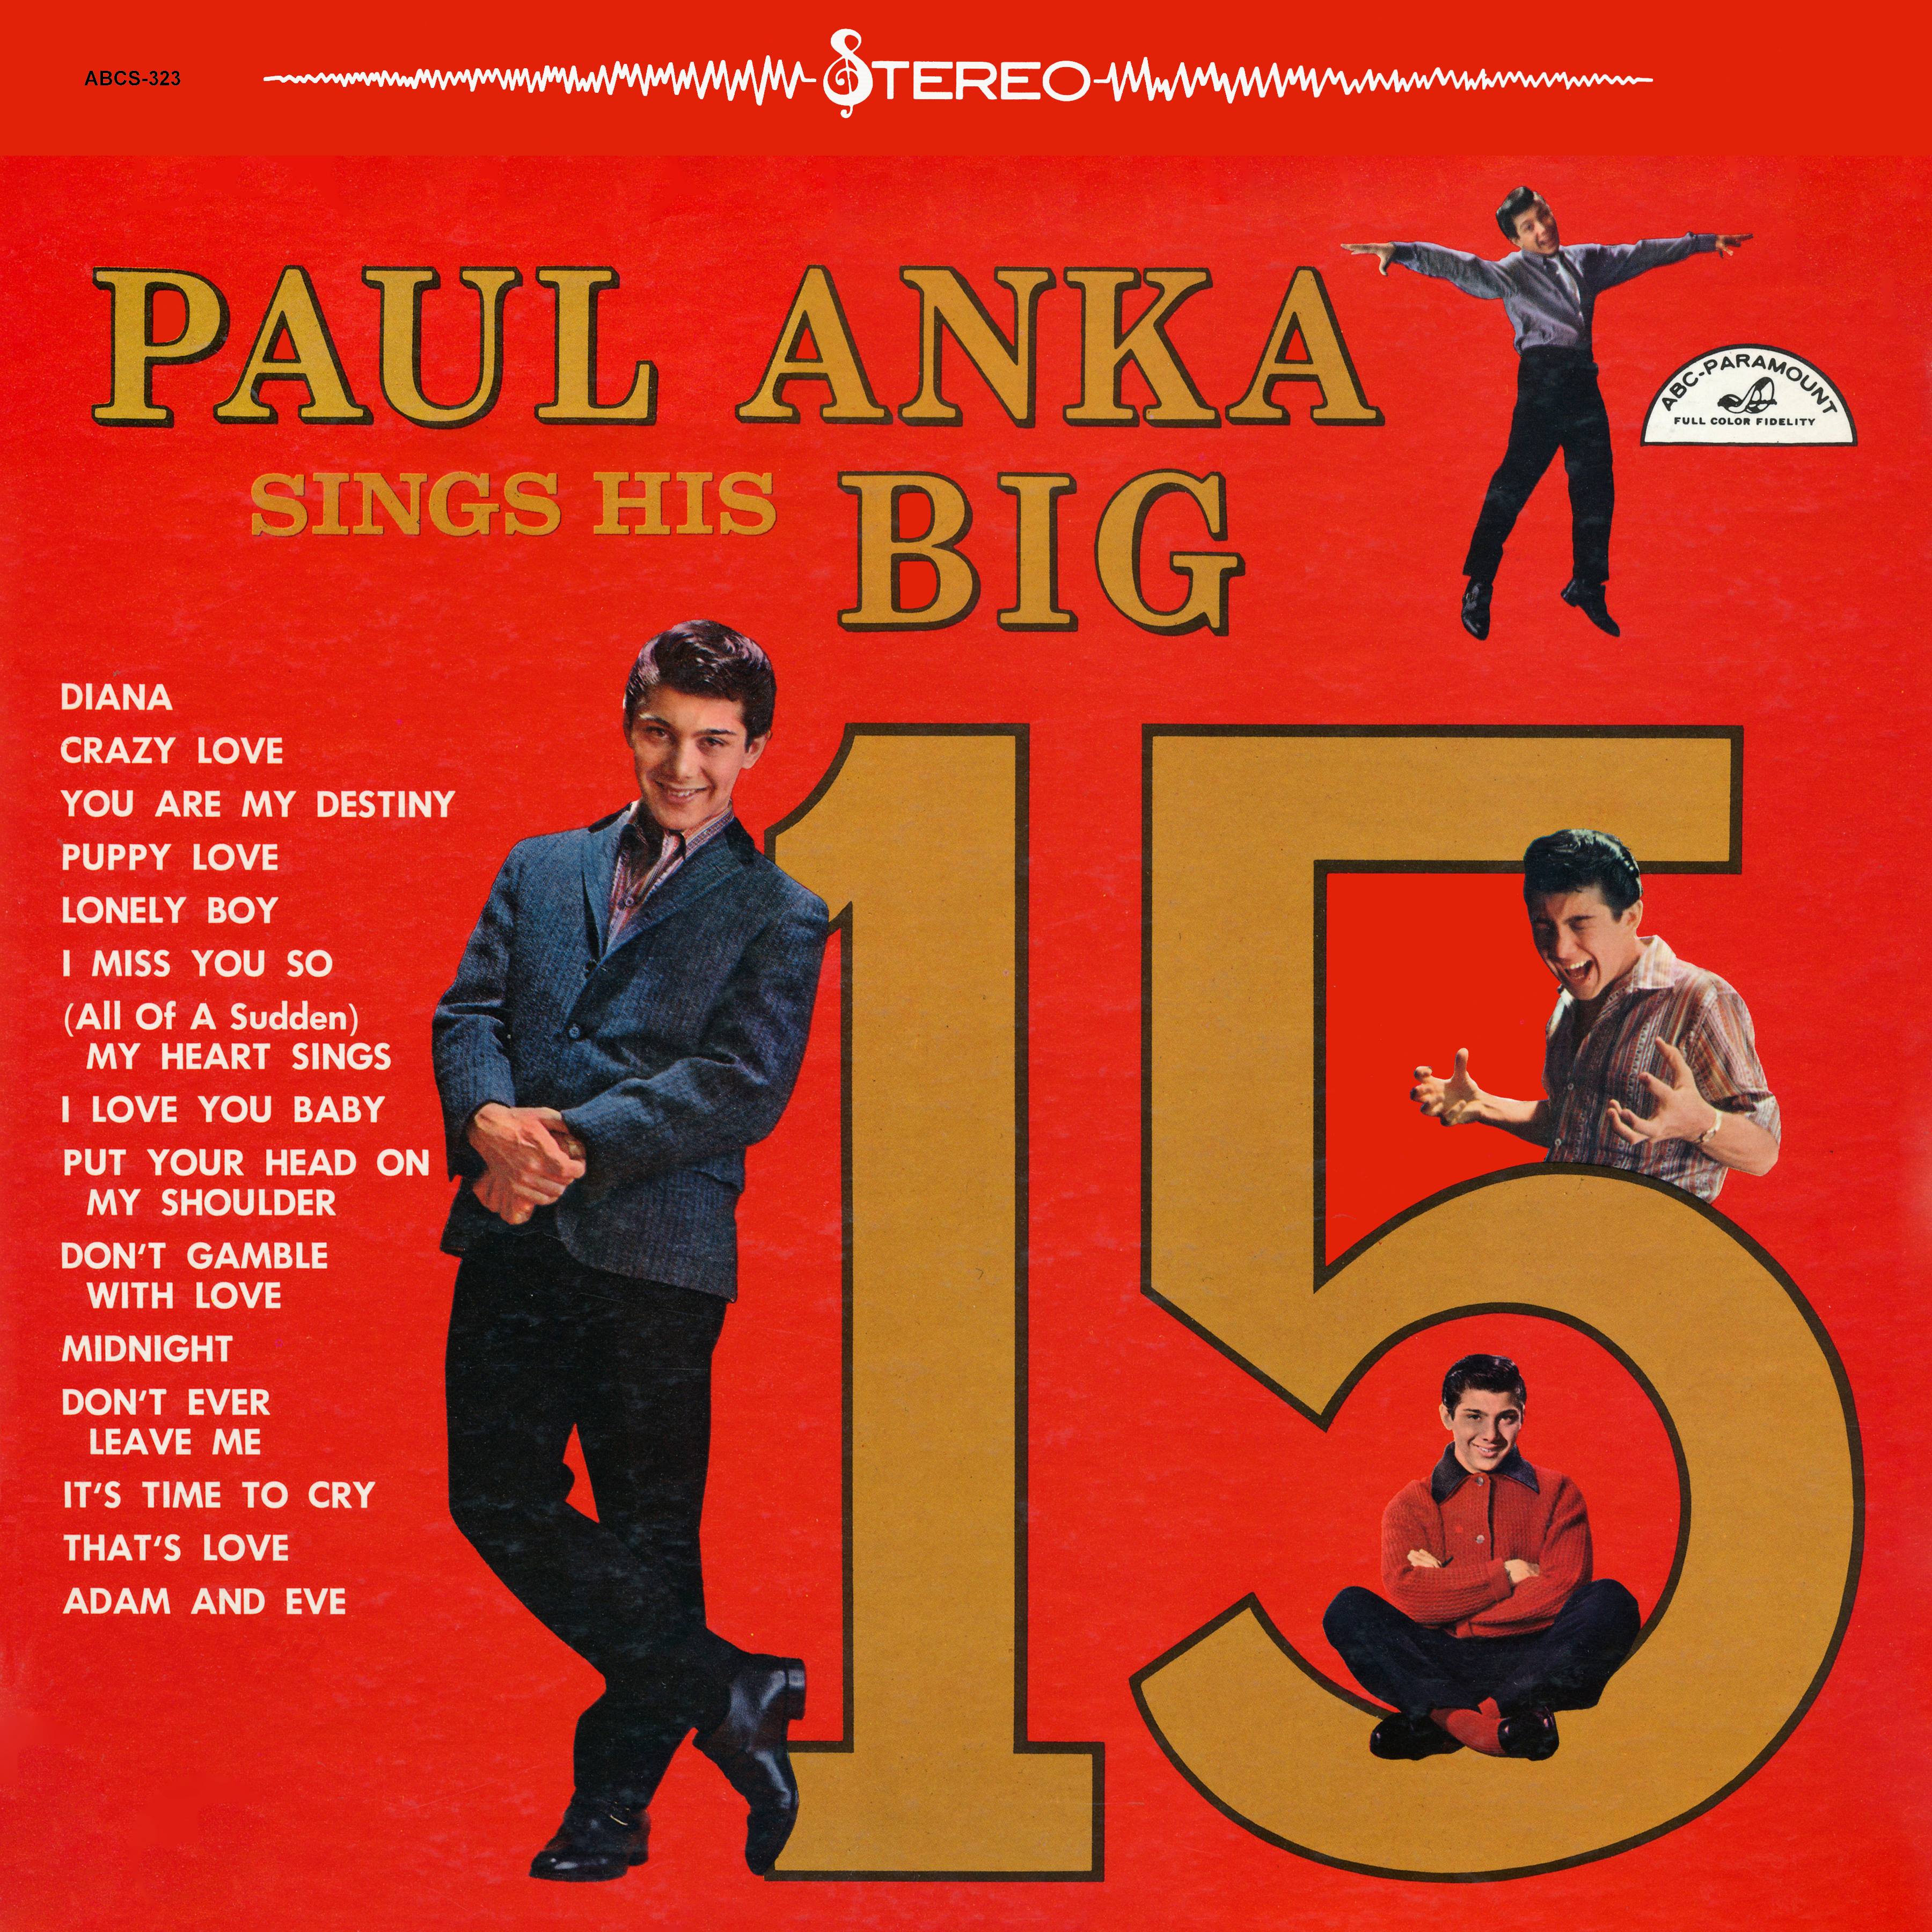 Paul Anka - 1960 Sings His Big 15 (ABCS-323 stereo) [FLAC] Vinyl